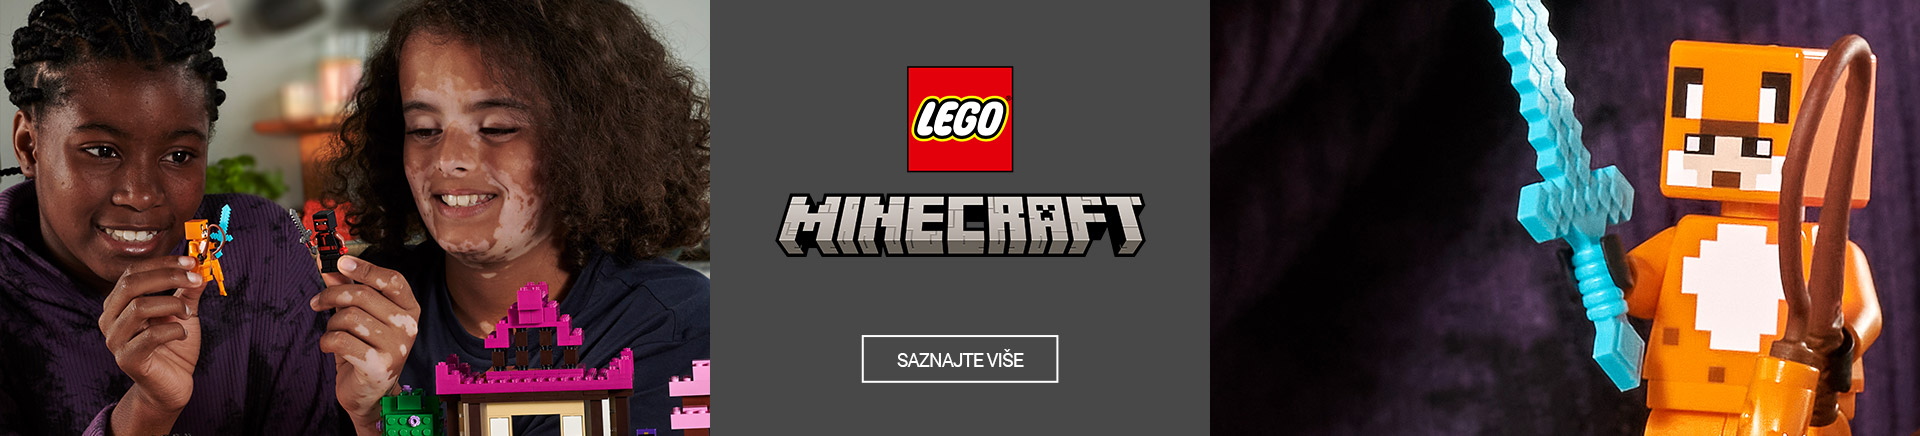 HR~Lego minecraft MOBILE 380 X 436.jpg